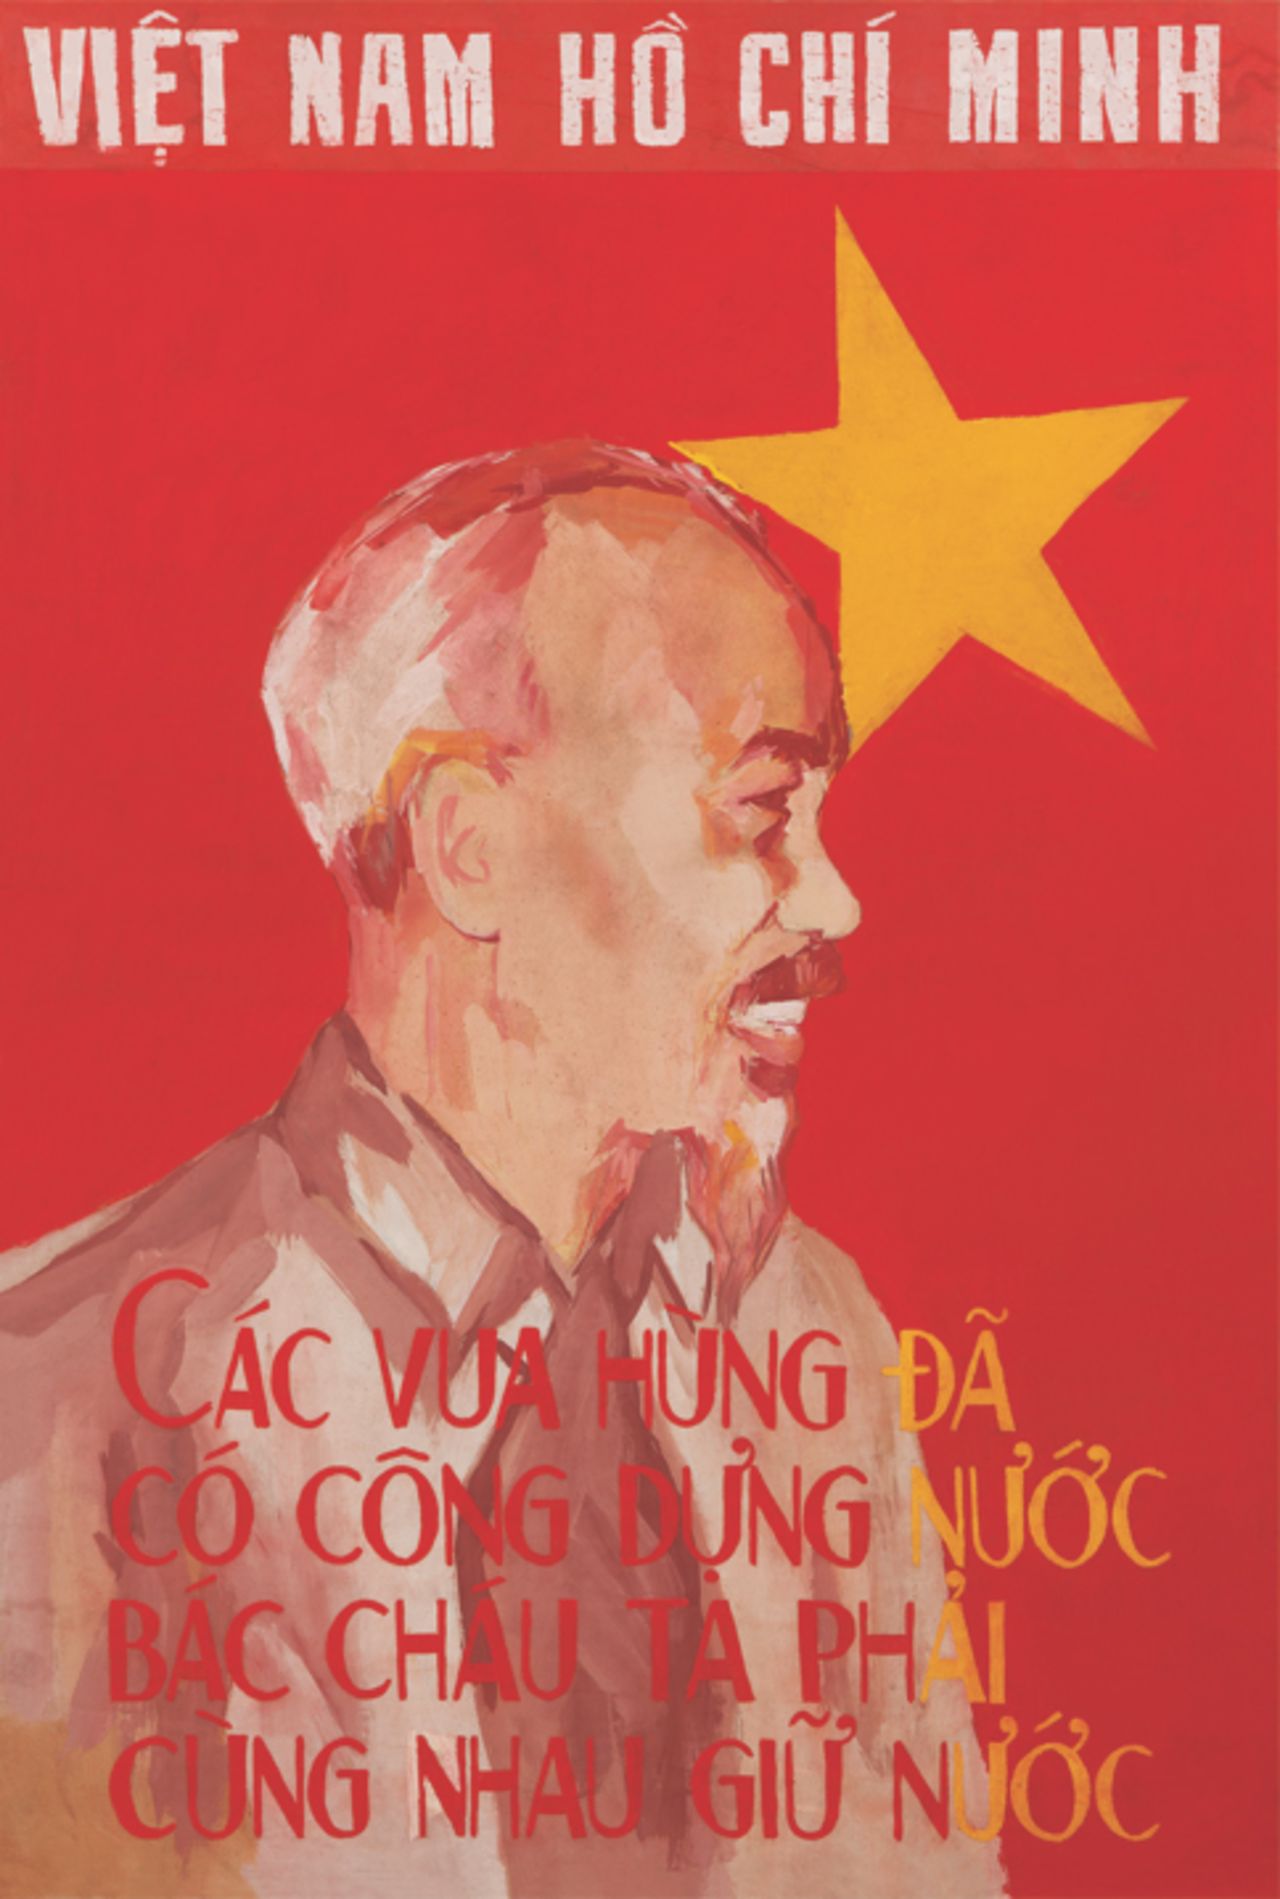 Post of Ho Chi Minh